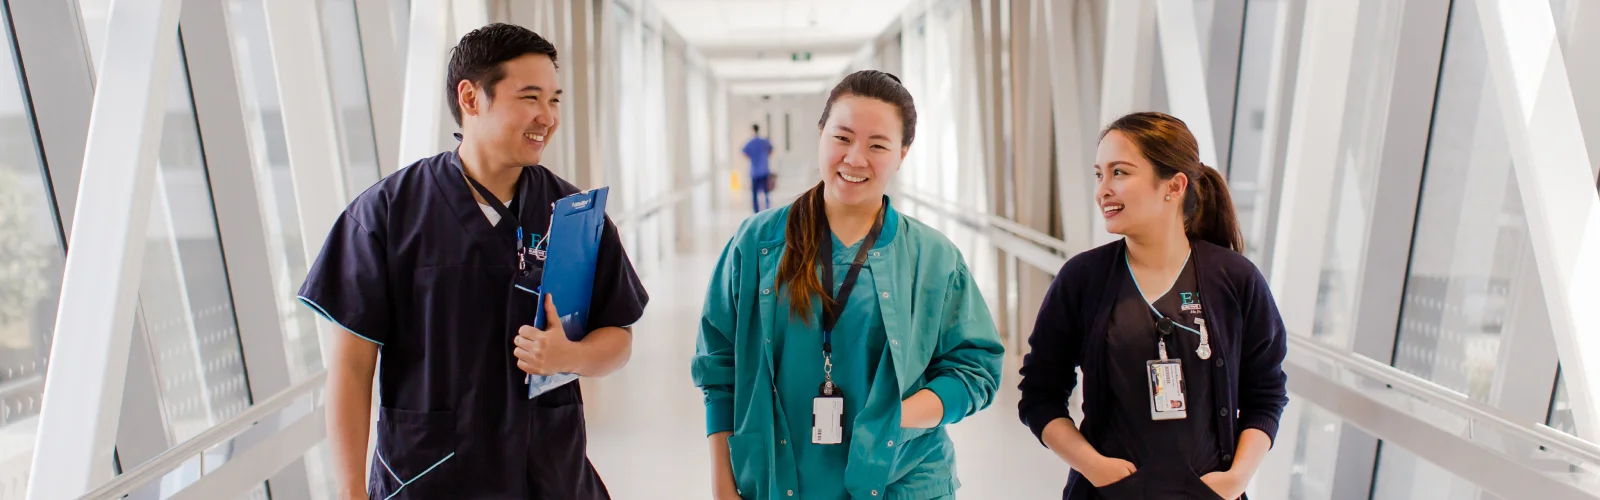 Elective Surgery Centre nurses - Health New Zealand Waitemata